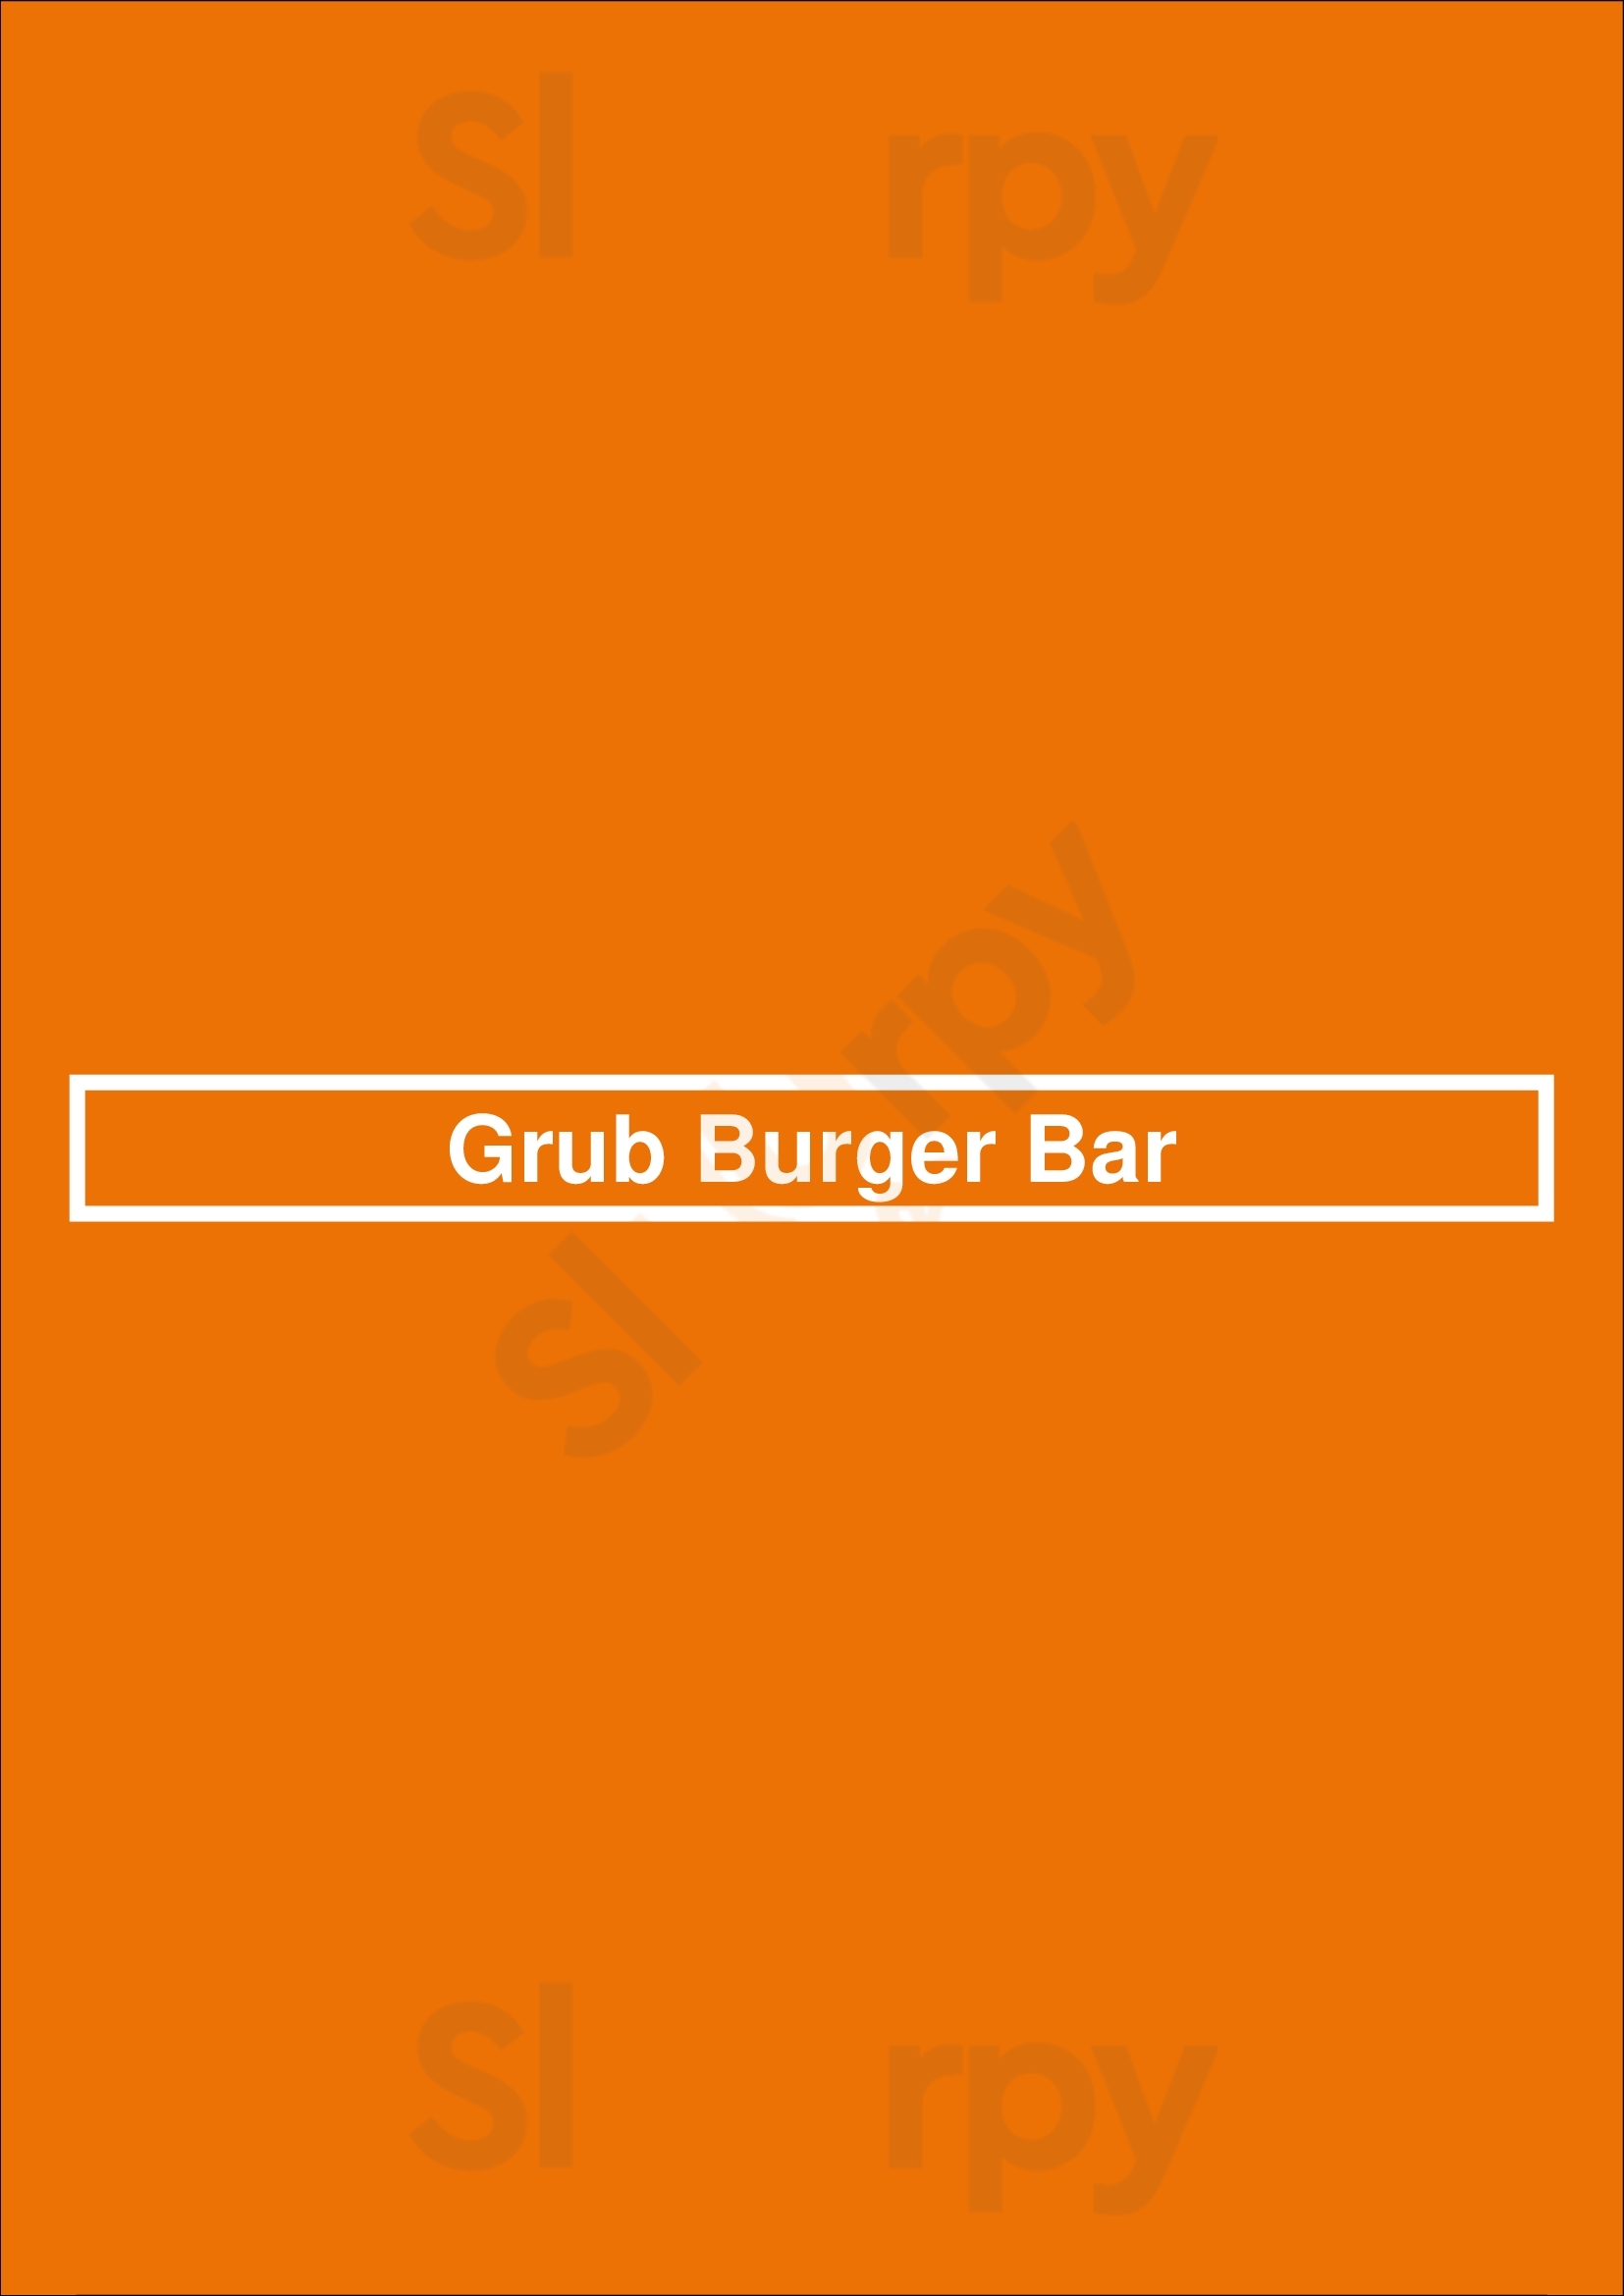 Grub Burger Bar Dallas Menu - 1